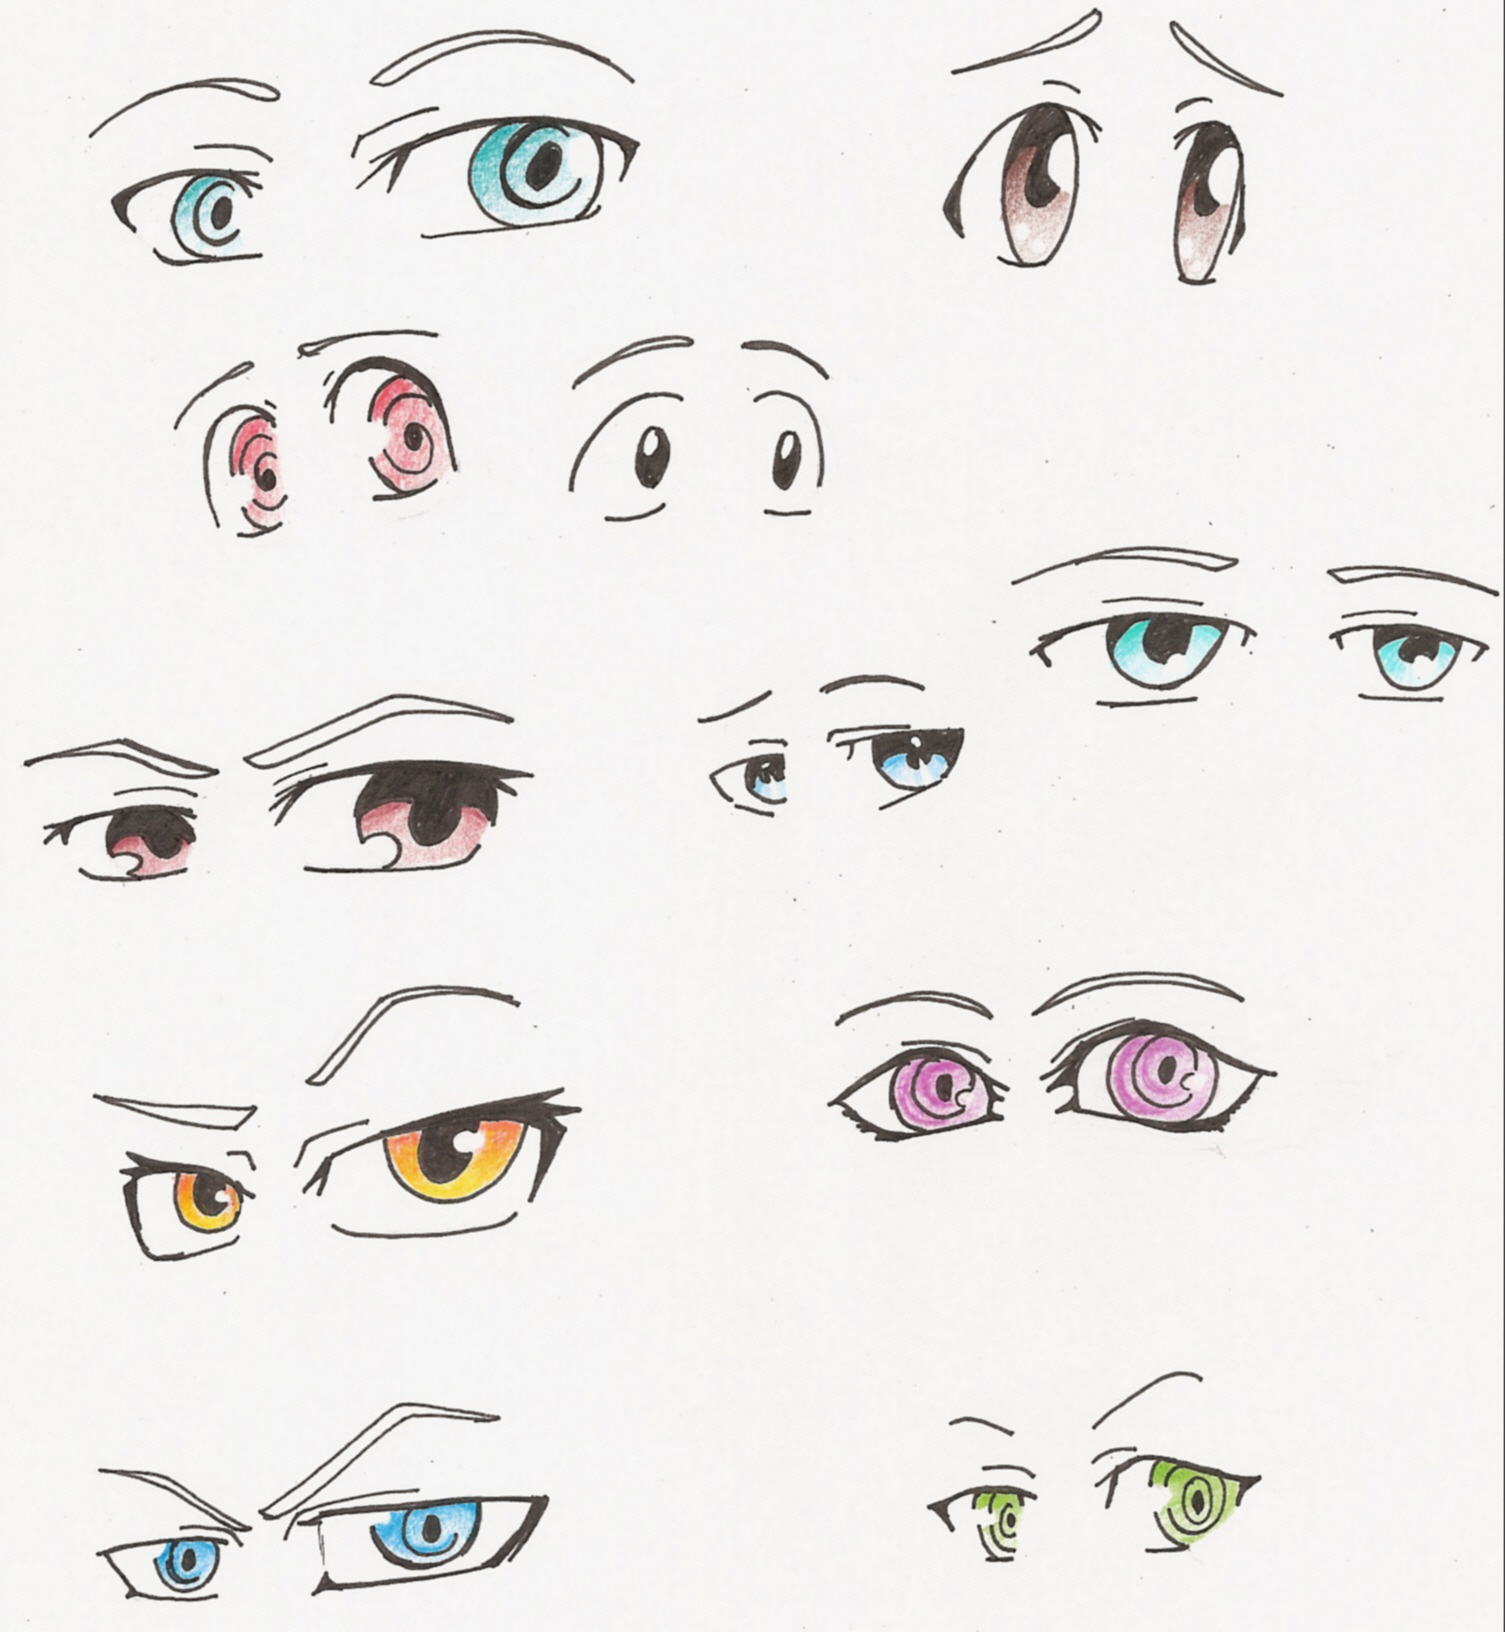 anime eyes male happy